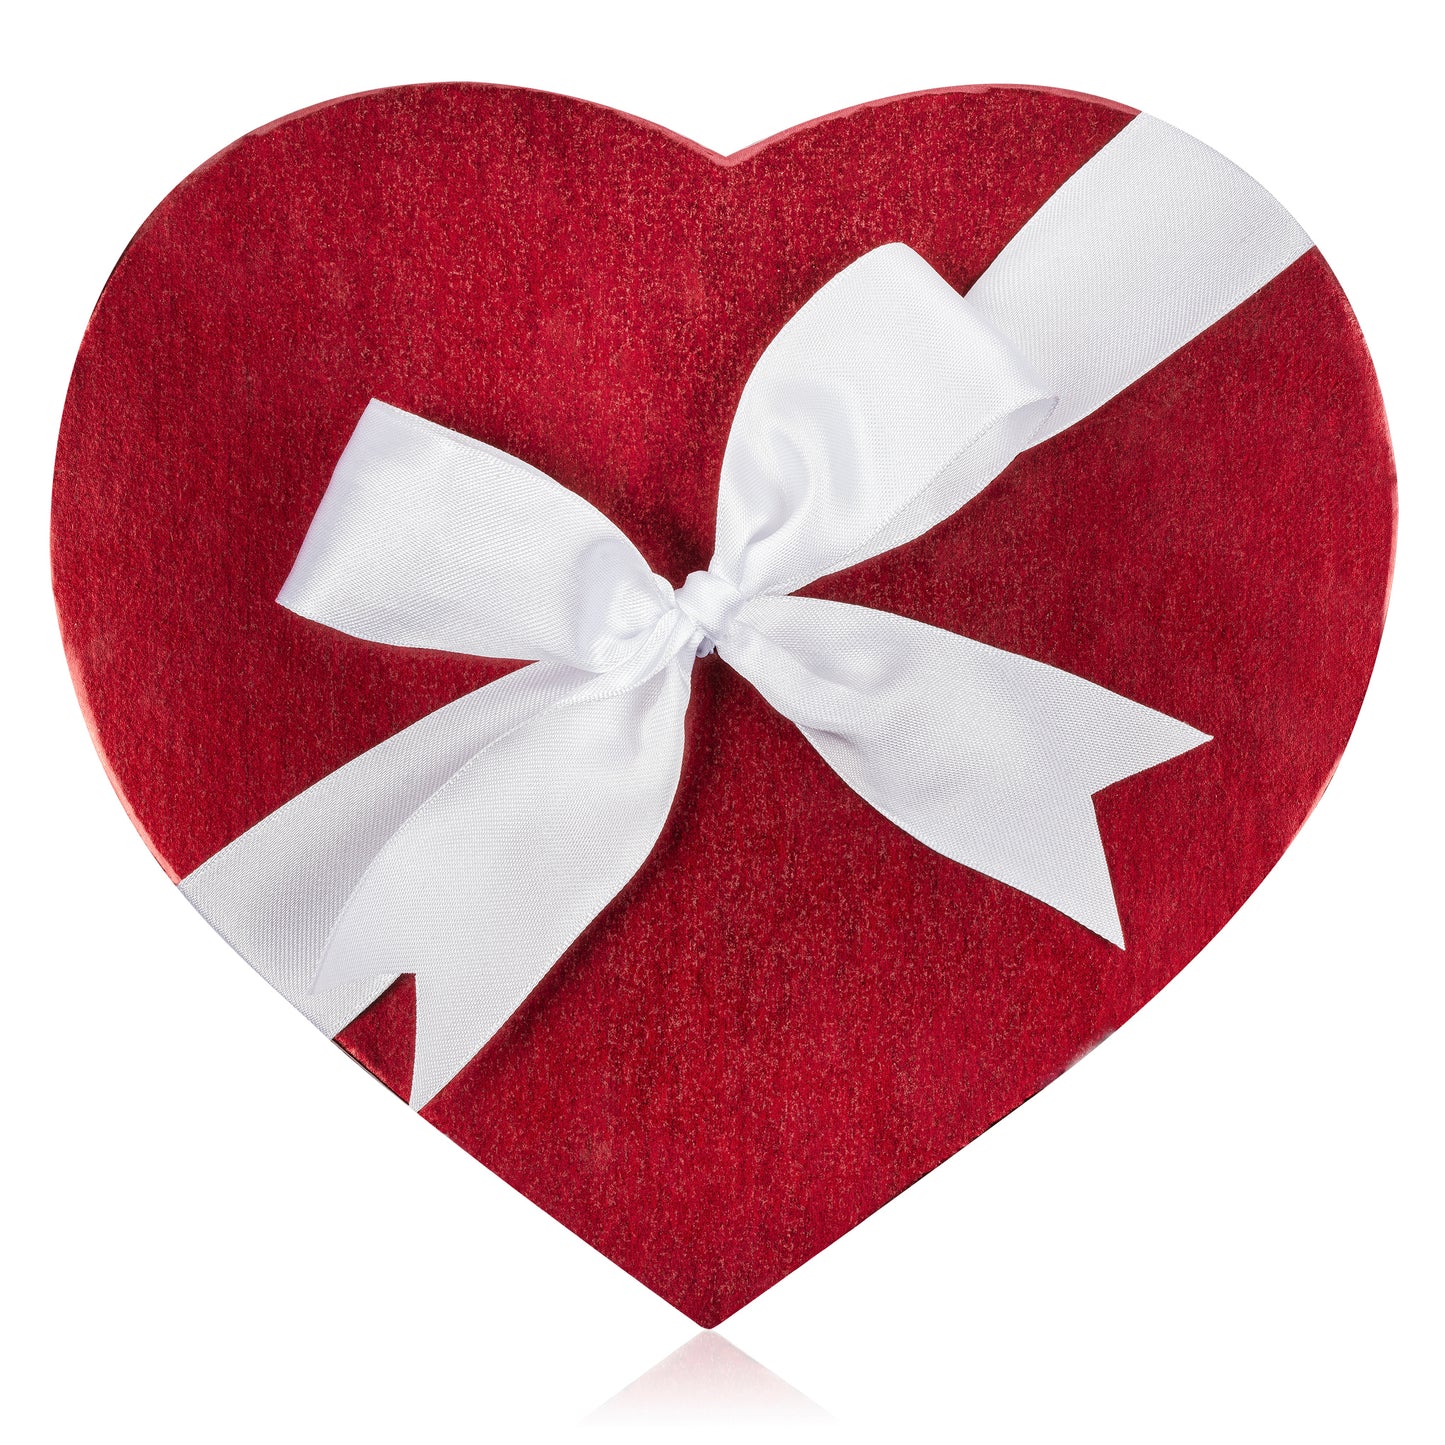 Large Heart Shaped Gift Box